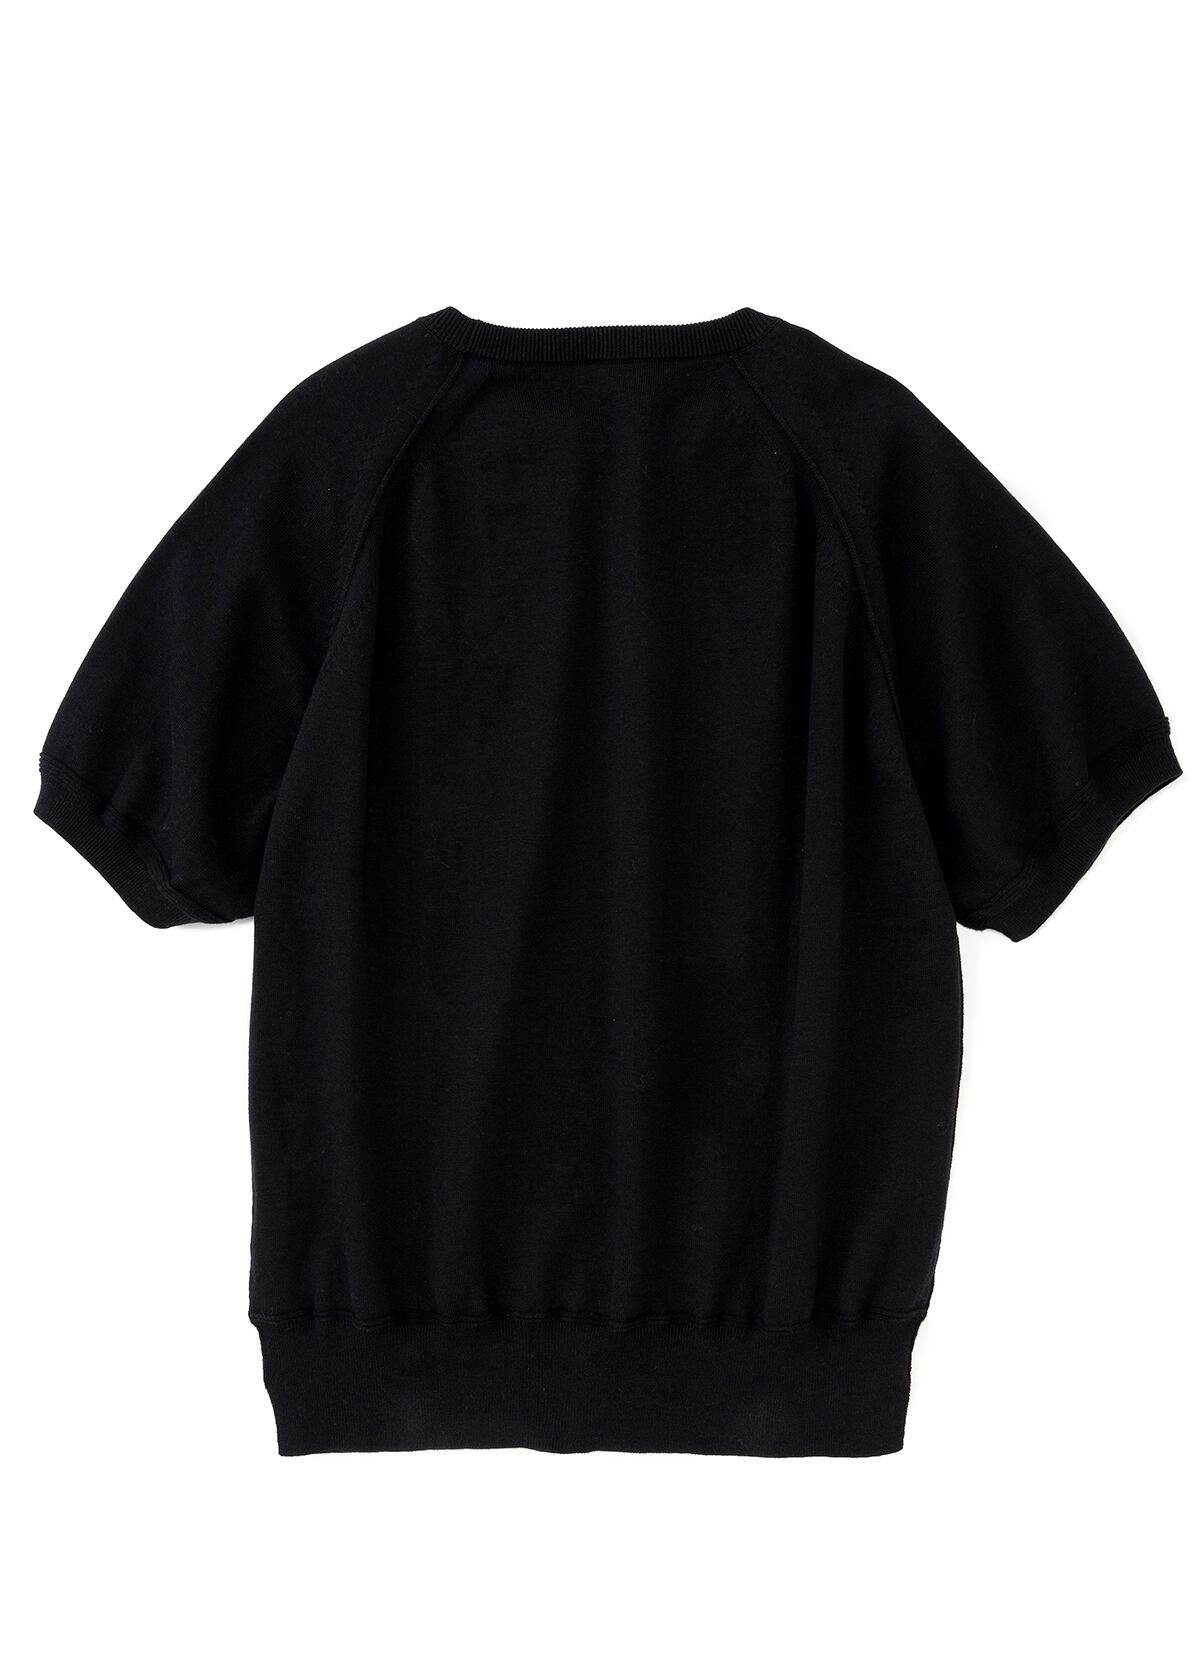 CONTROLLA+ cashmere blend short sleeve raglan knit (black)